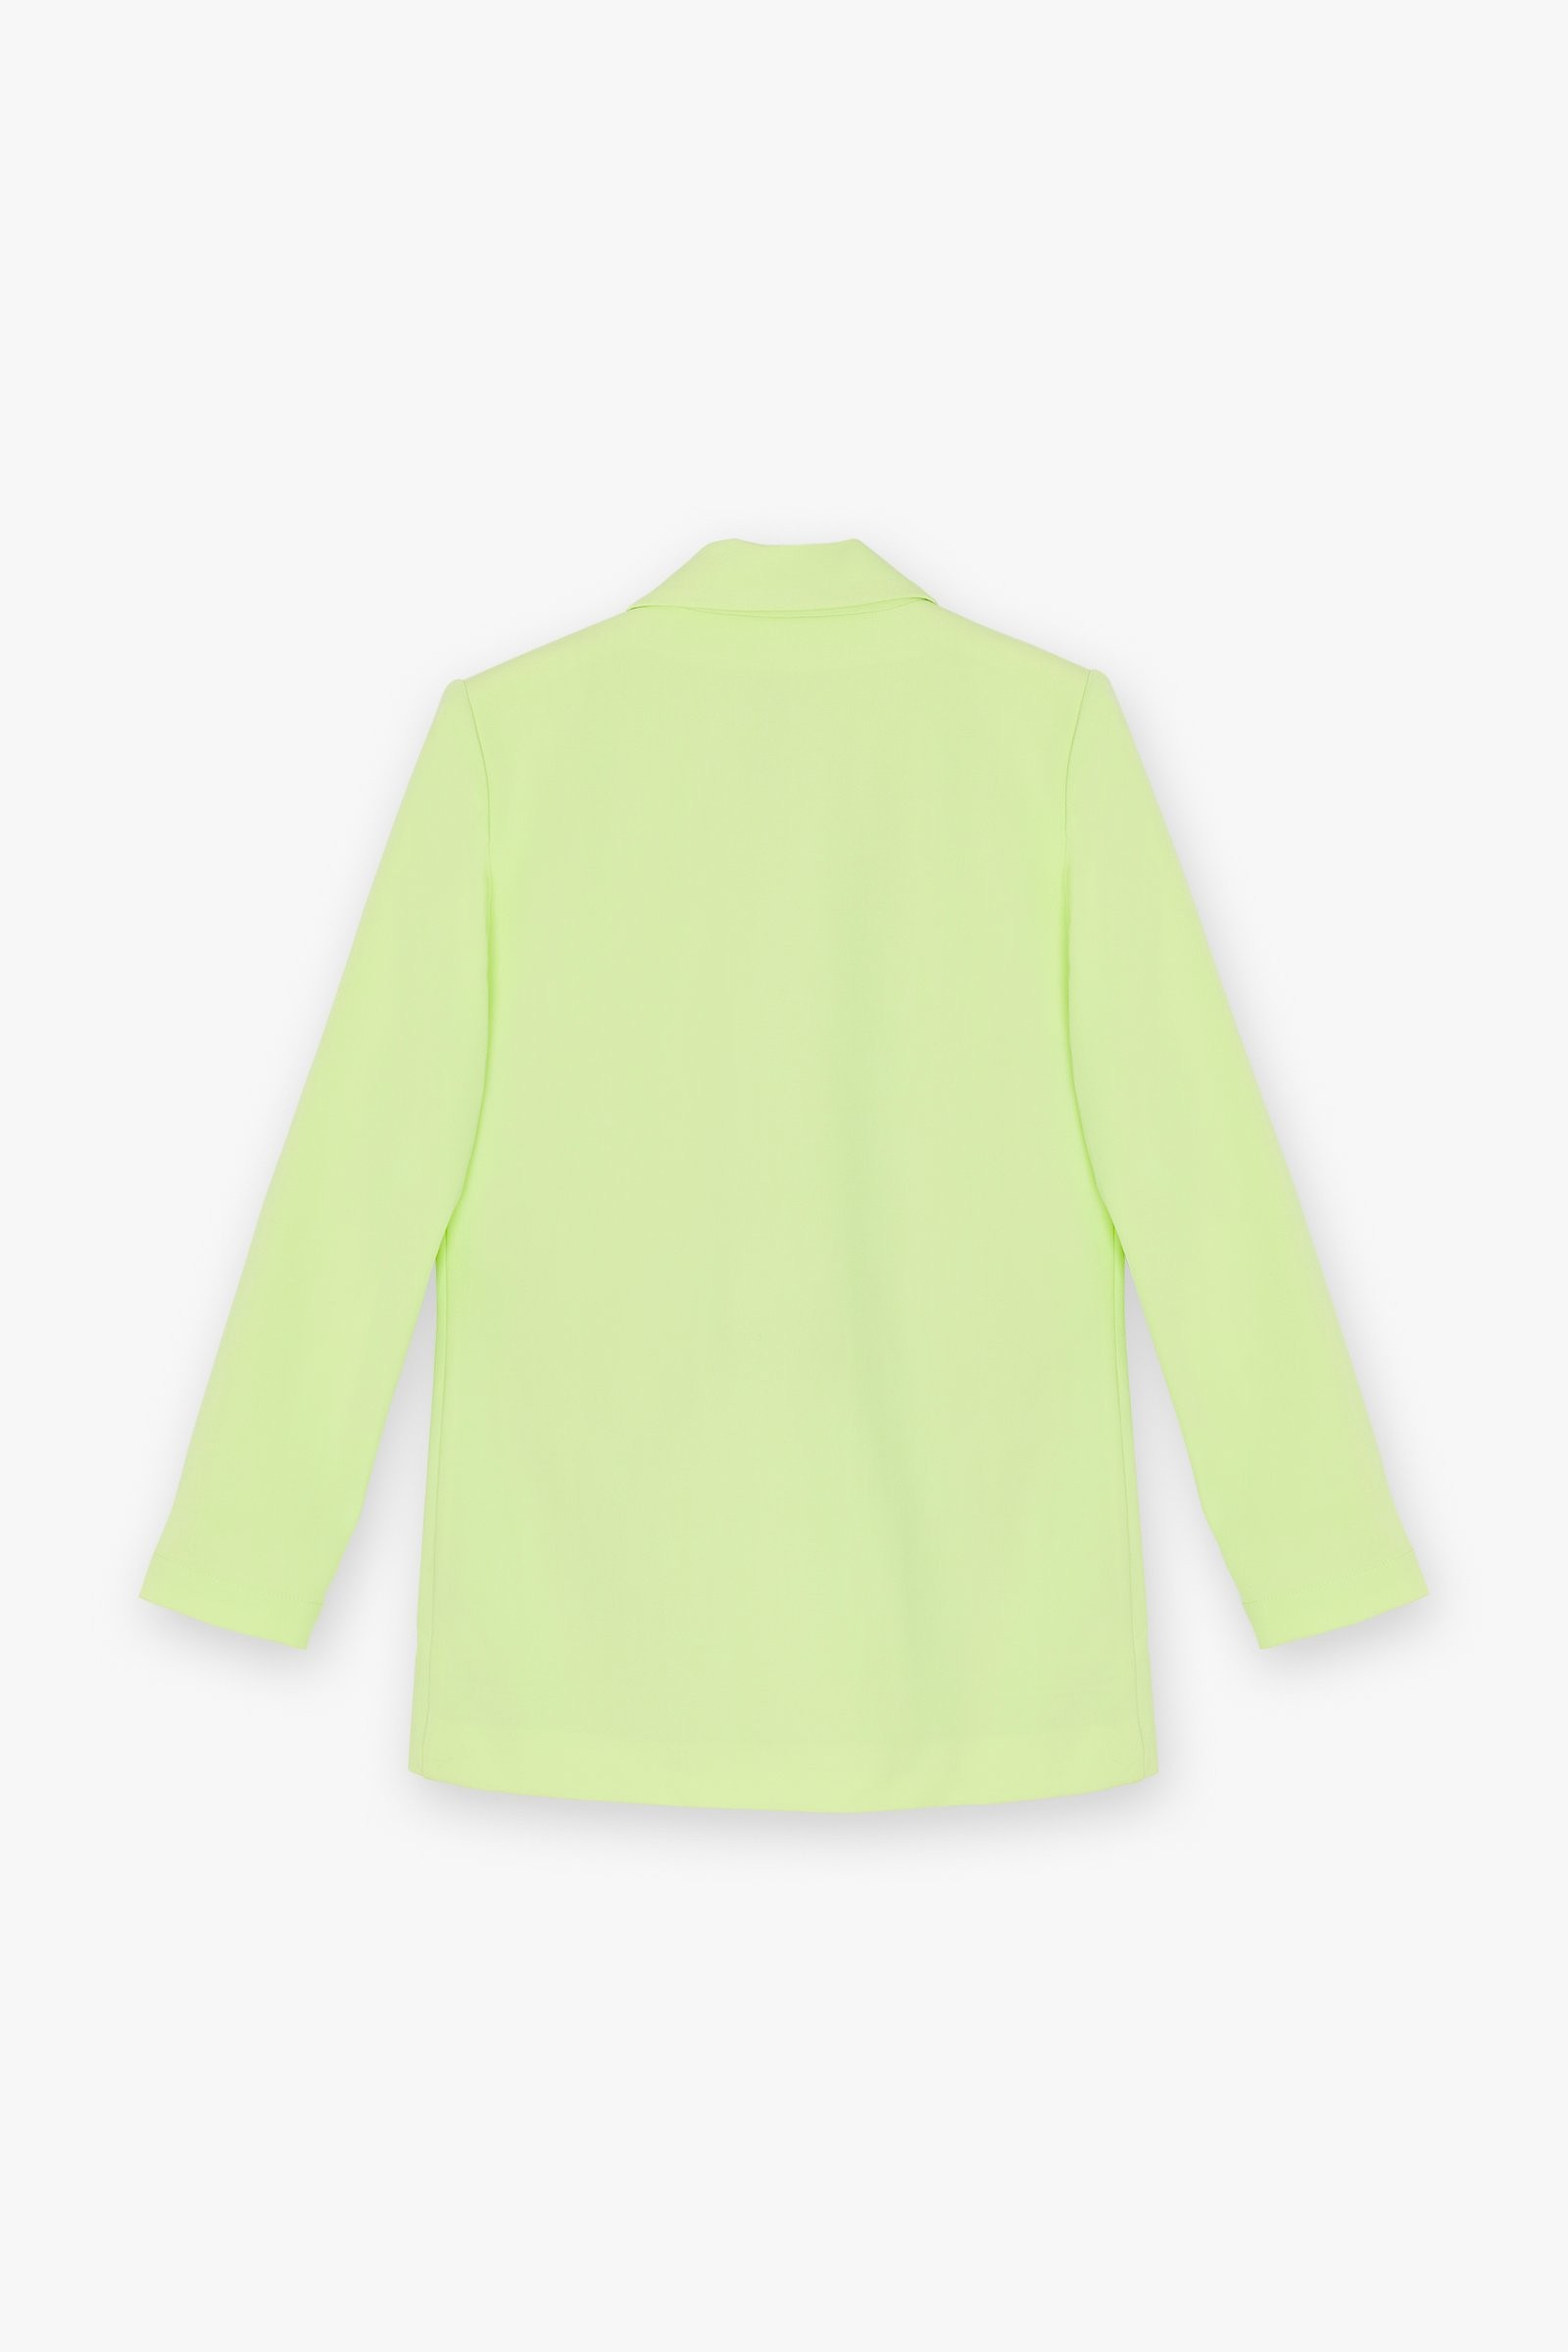 CKS Dames - SELVI - blazer - bright green